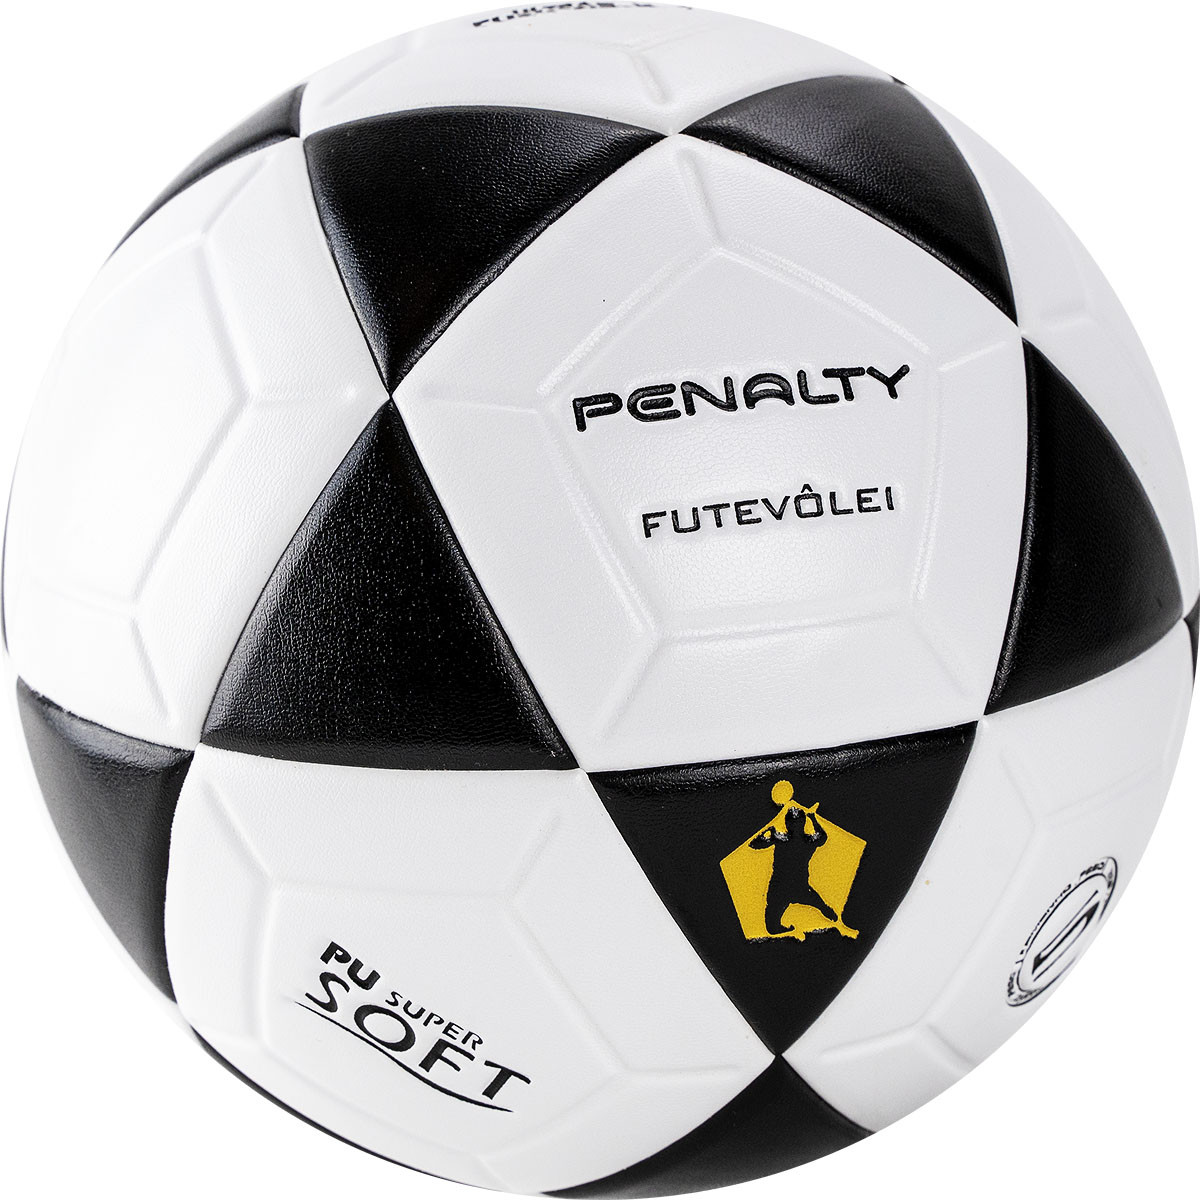 Мяч для футволея PENALTY BOLA FUTEVOLEI ALTINHA XXI, арт.5213101110-U, р.5, PU, термосш, бело-черн